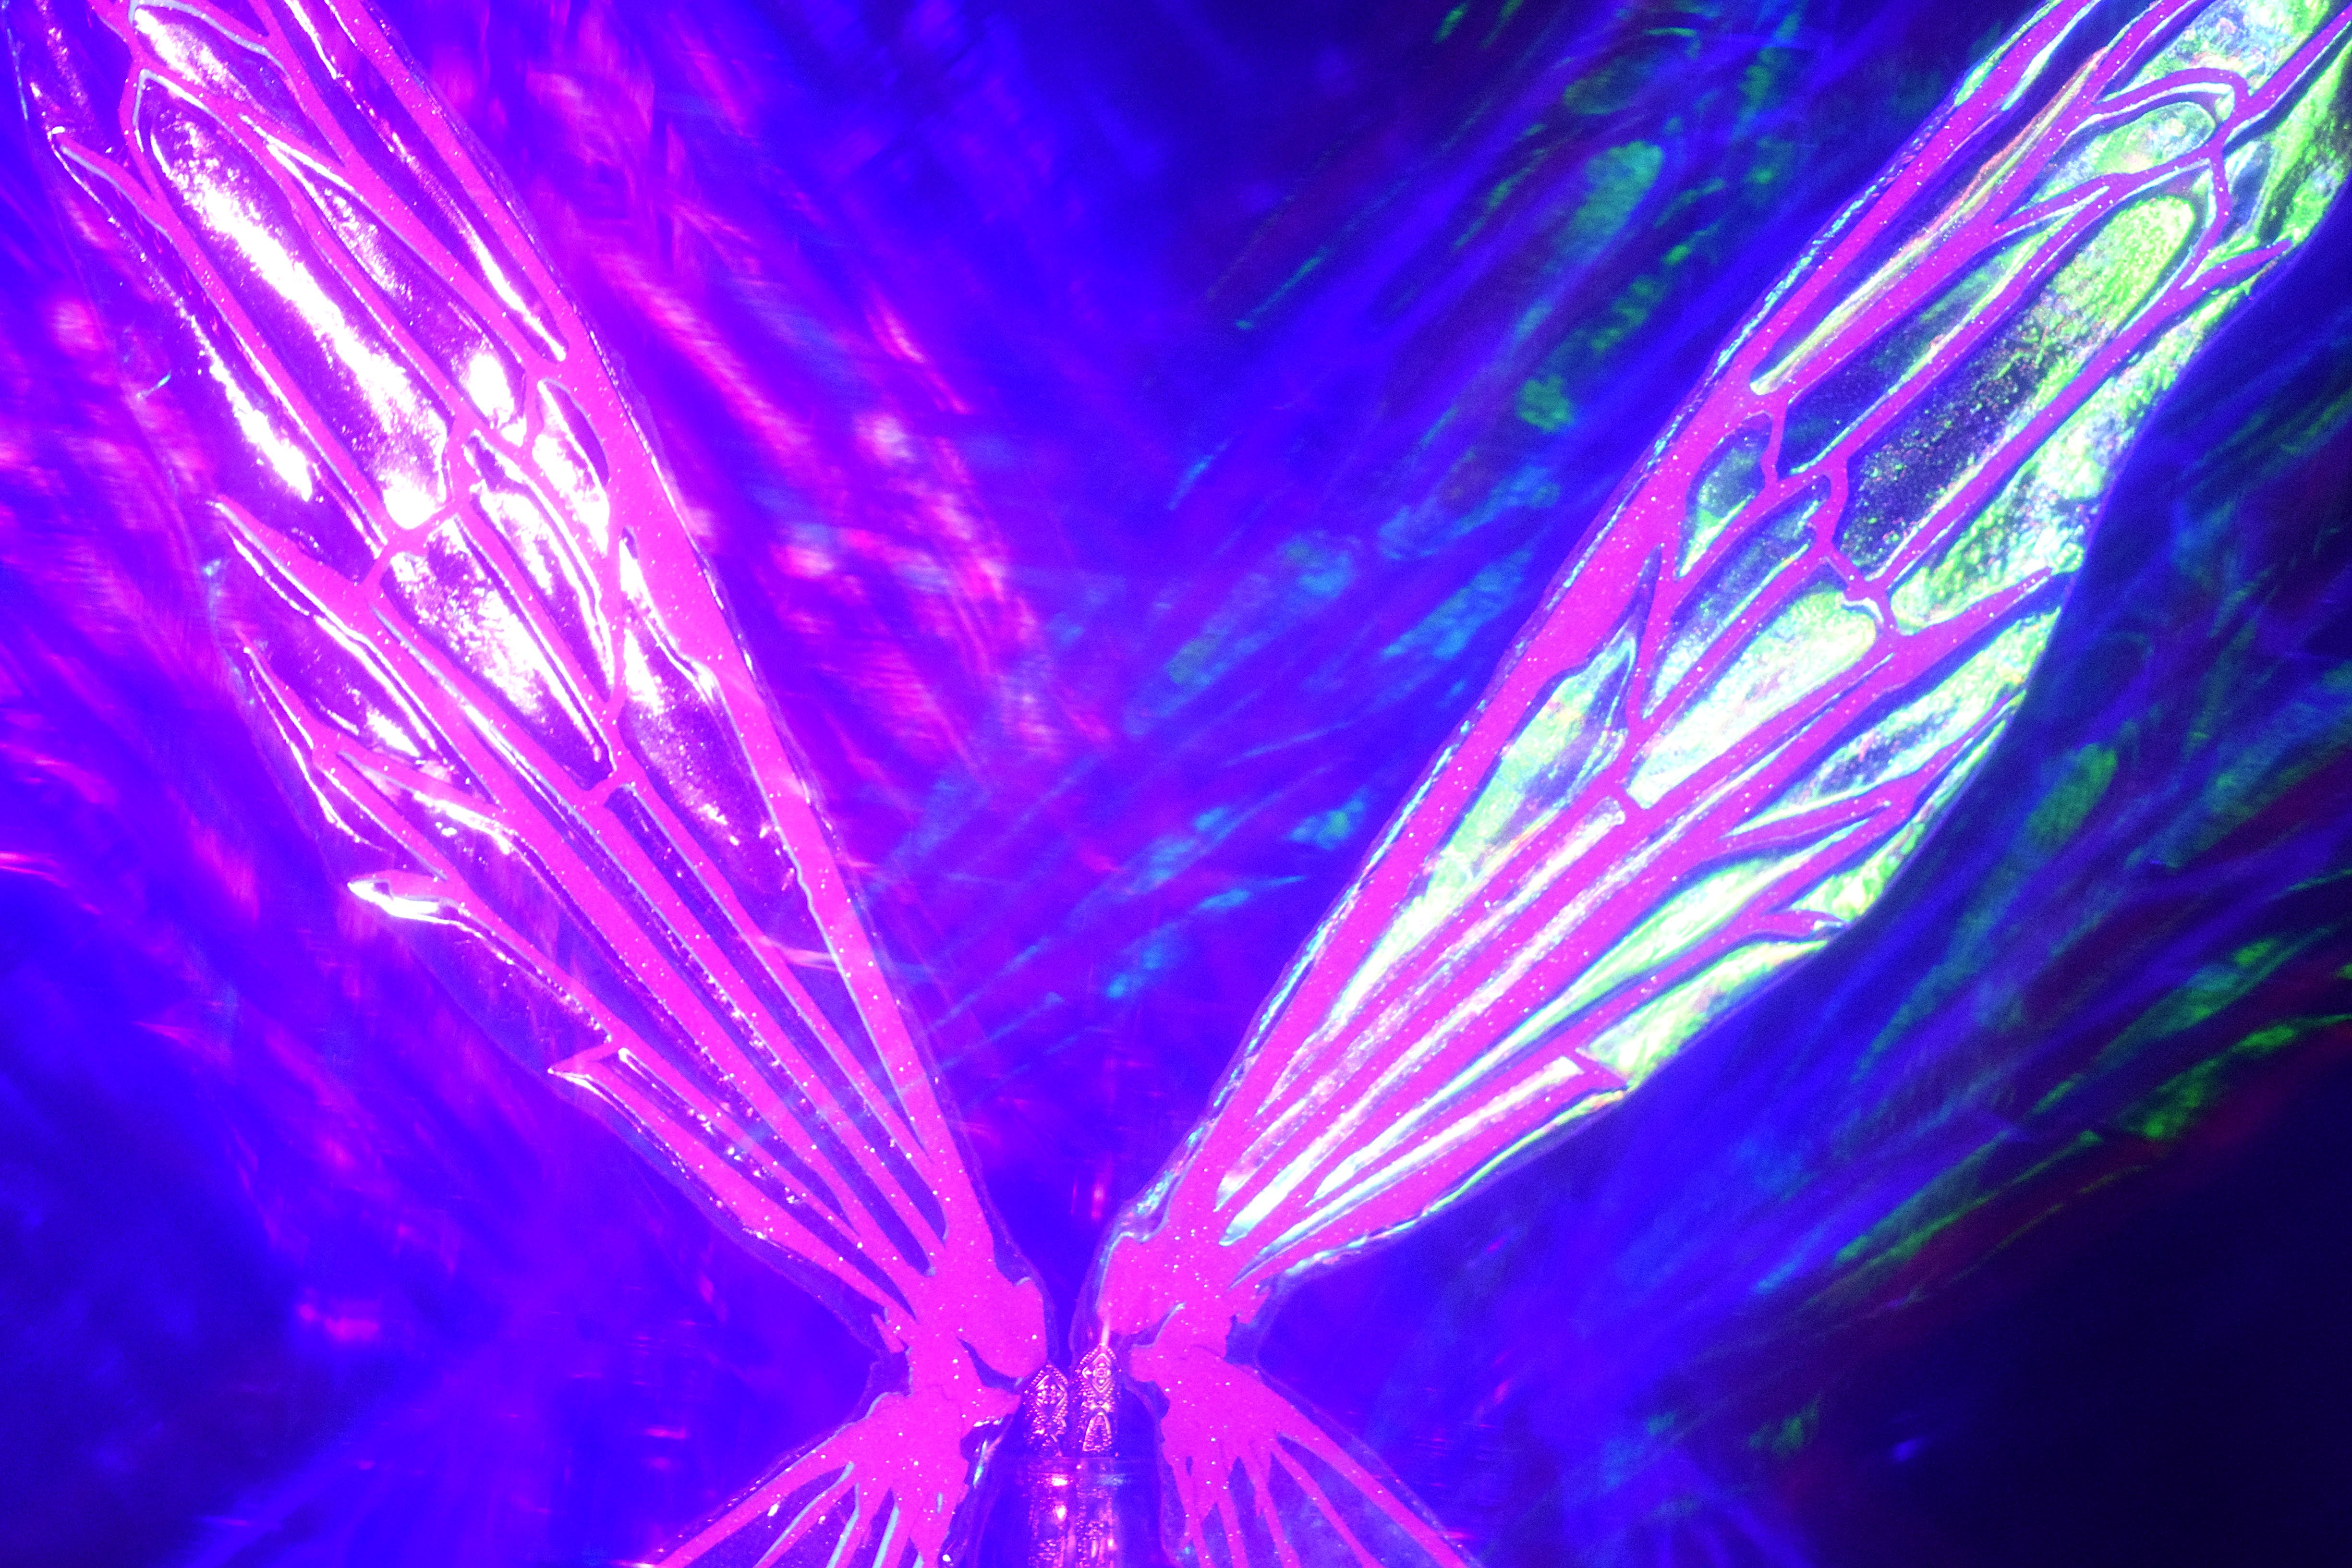 Neon Sprite Fairy Wing Hair Sticks - Static Purple